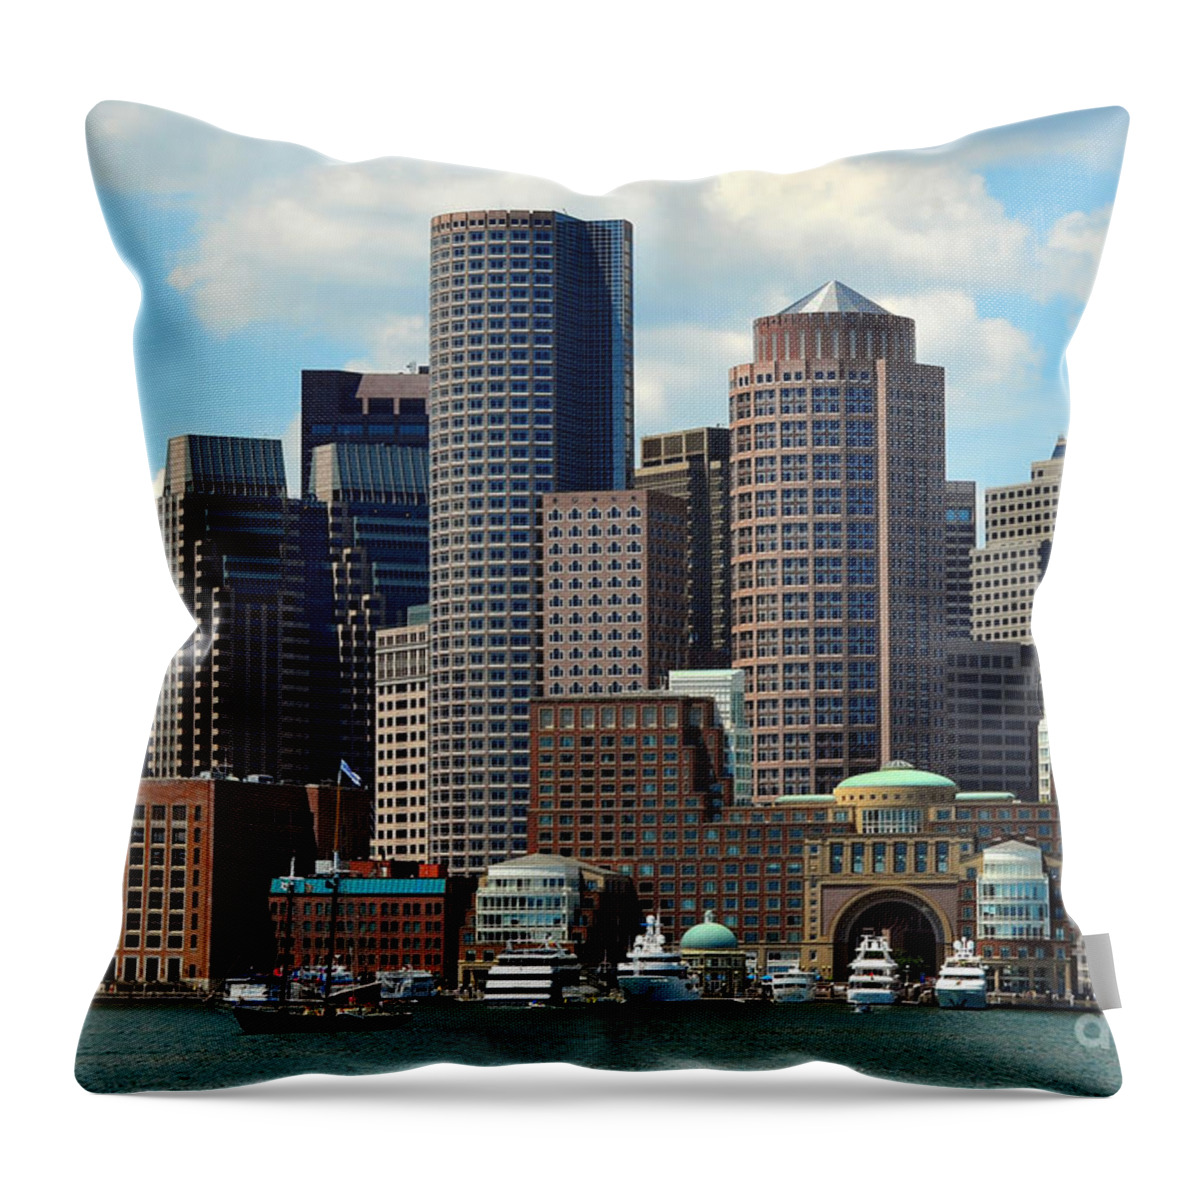 Skyscrapers Throw Pillow featuring the photograph Boston Skyline by Randi Grace Nilsberg